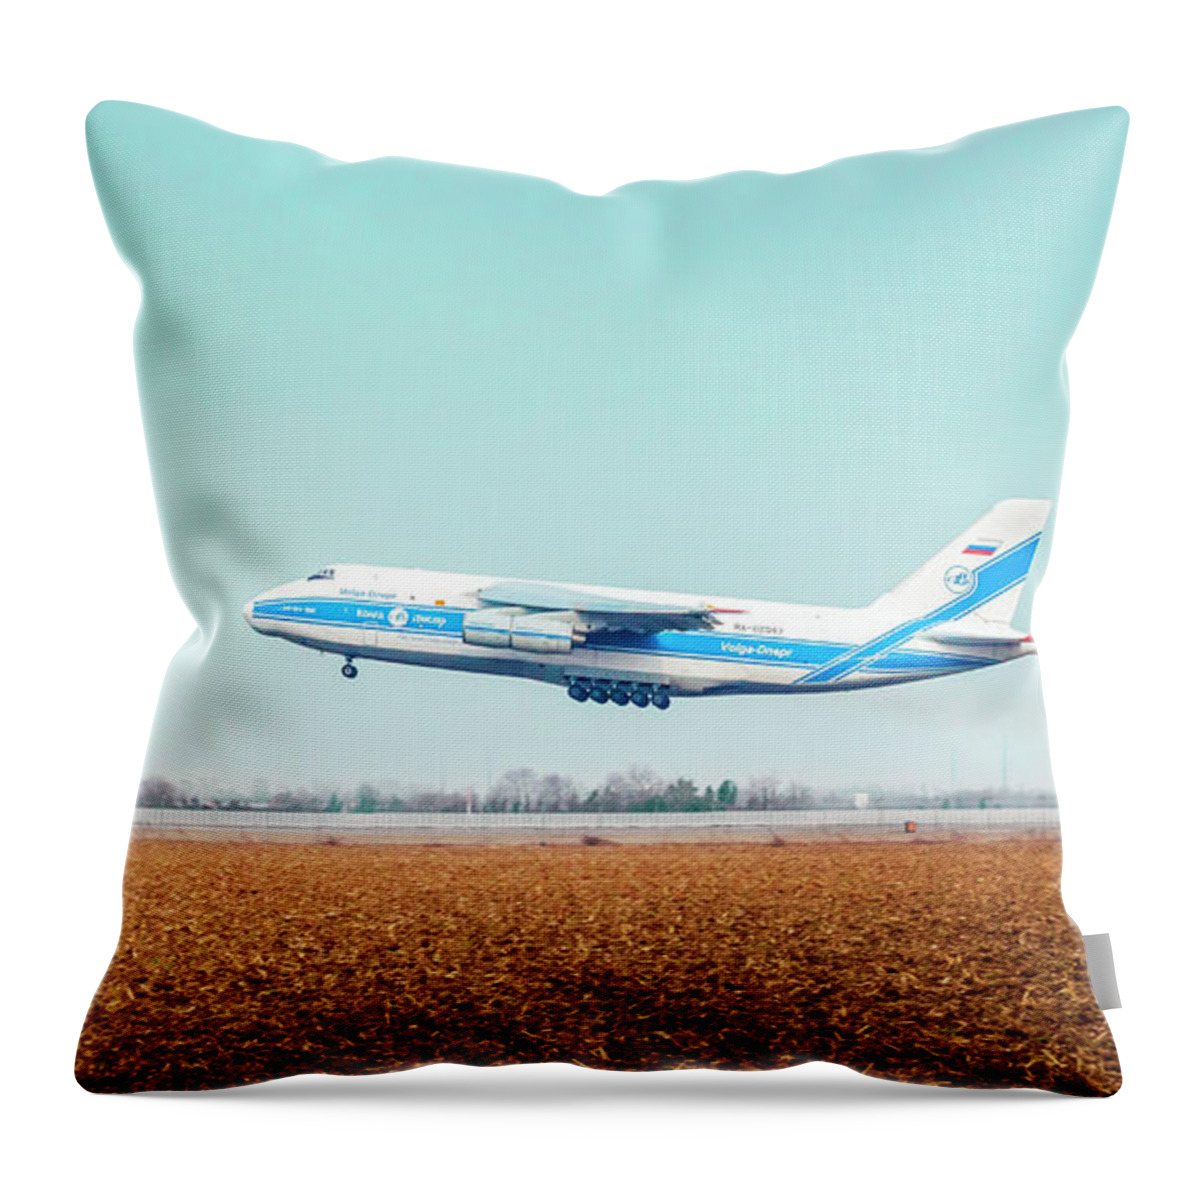 Aeroplane Throw Pillow featuring the photograph Antonov An-124 Ruslan taking off by Helga Novelli